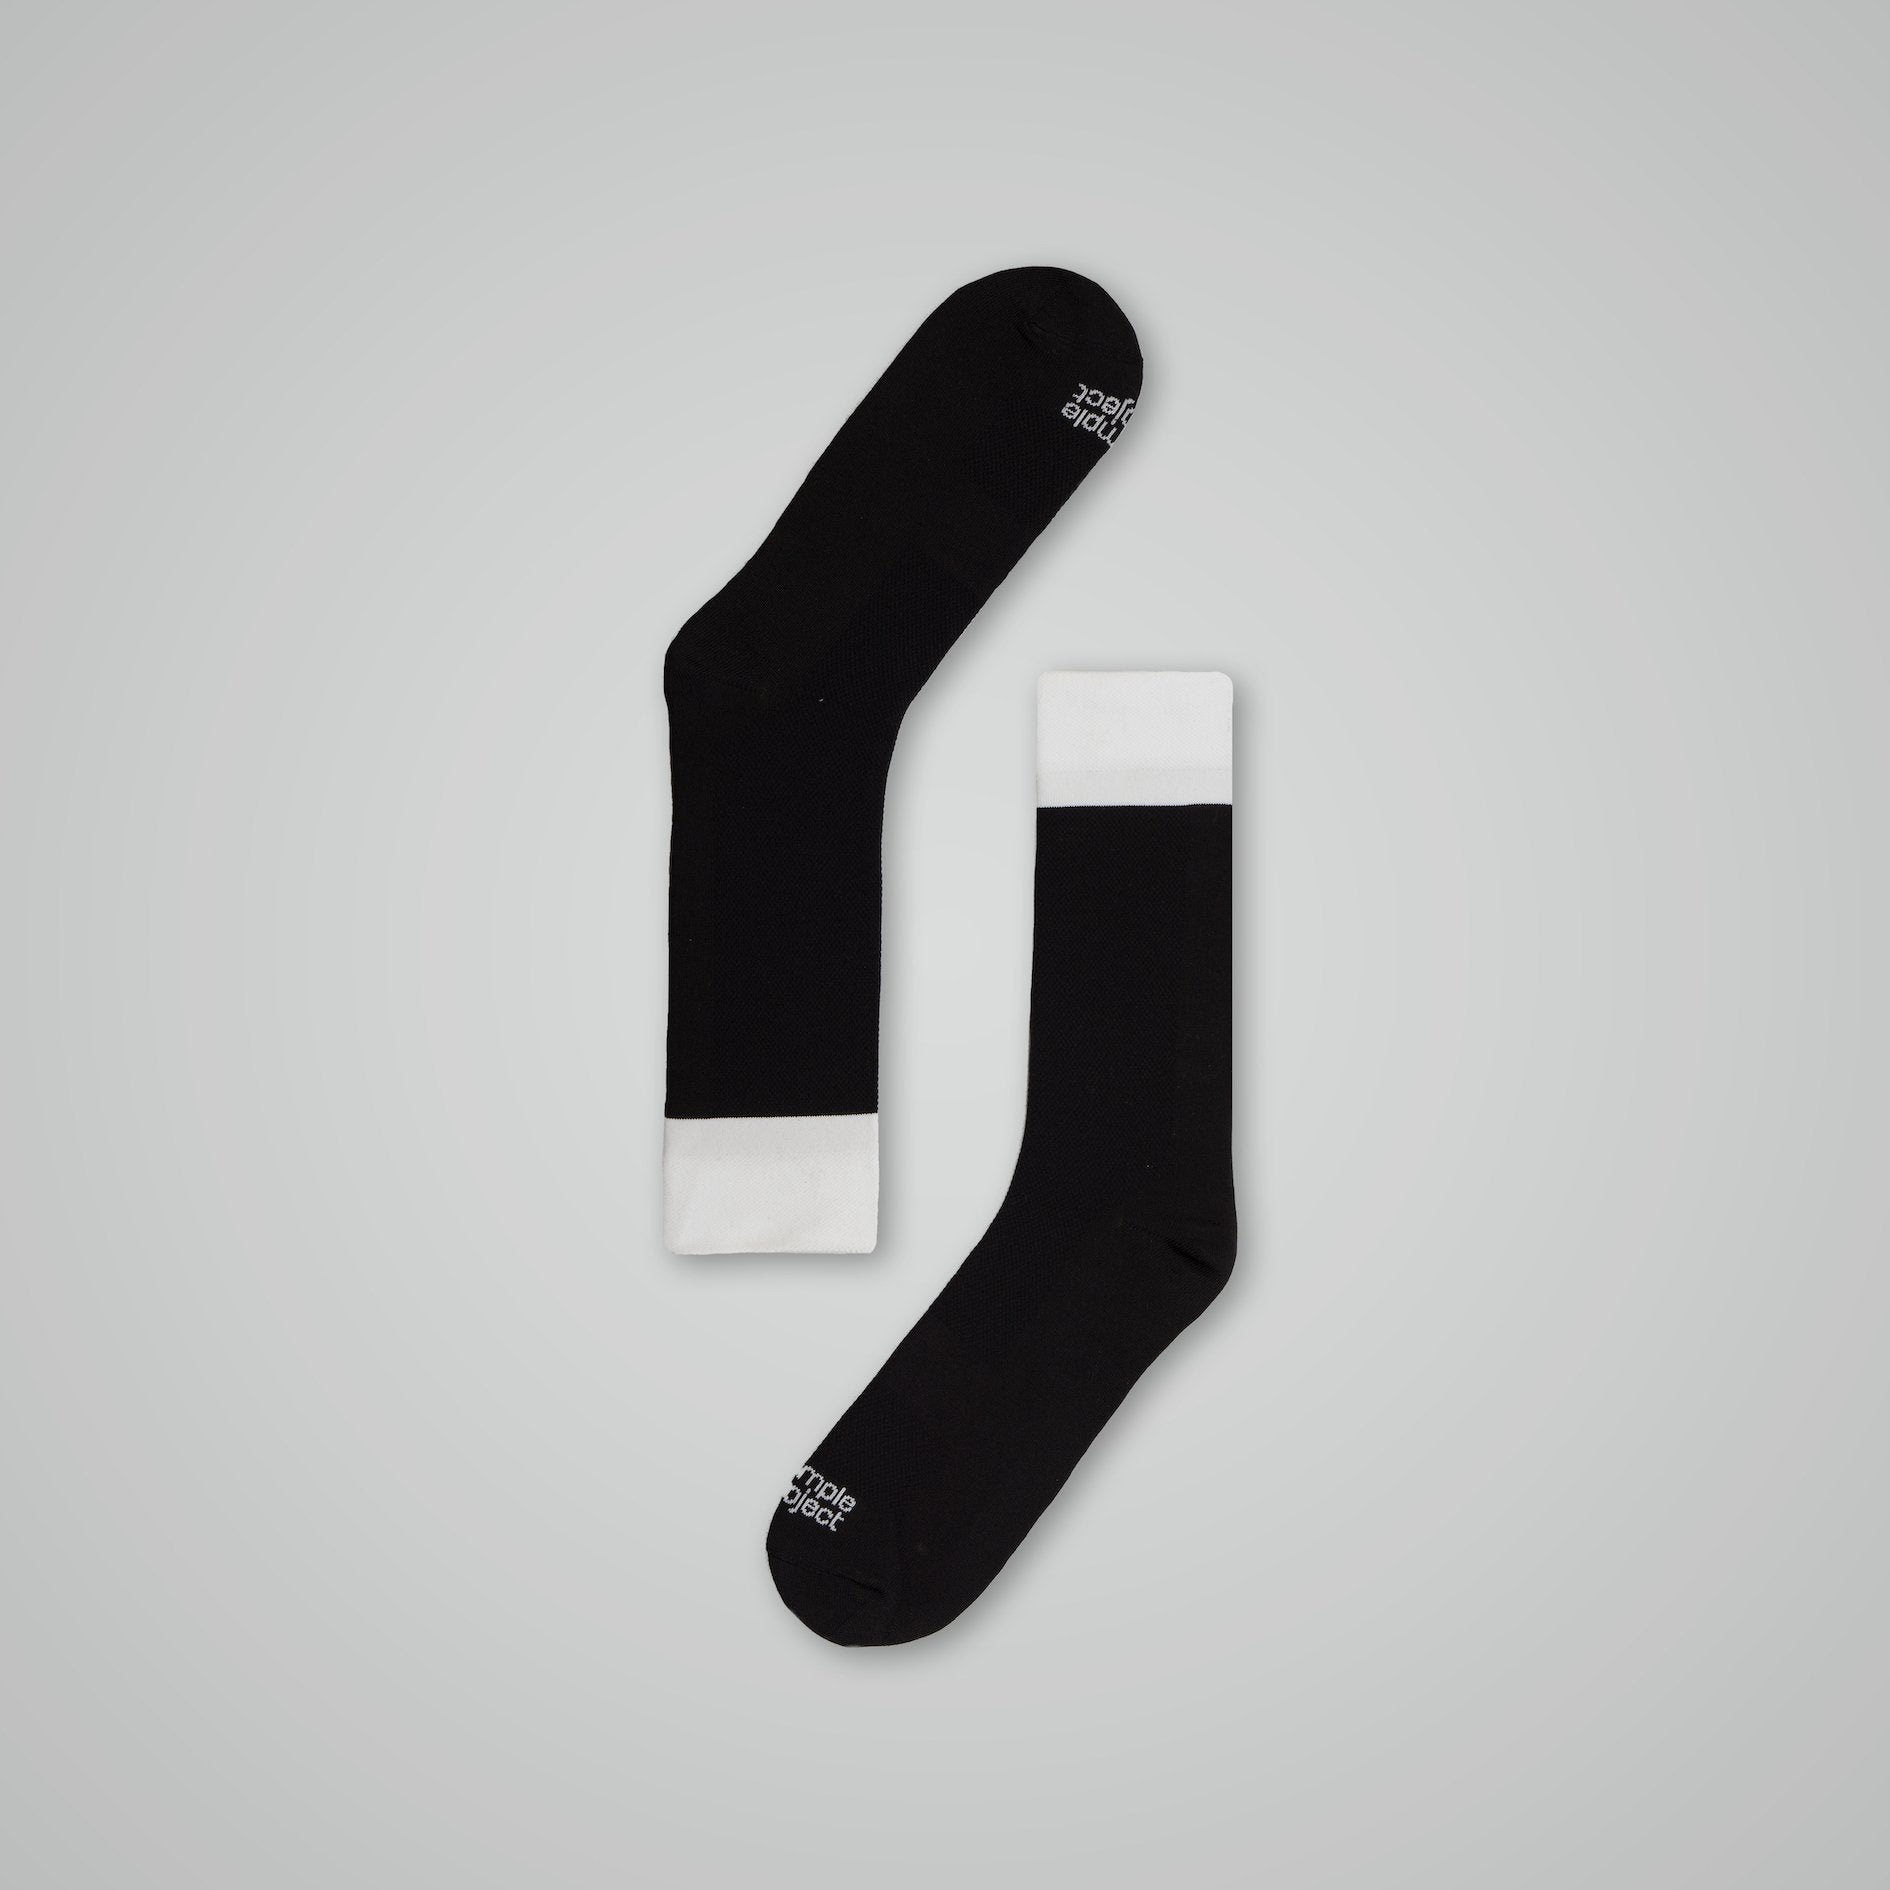 TwoTone Socks - White and black